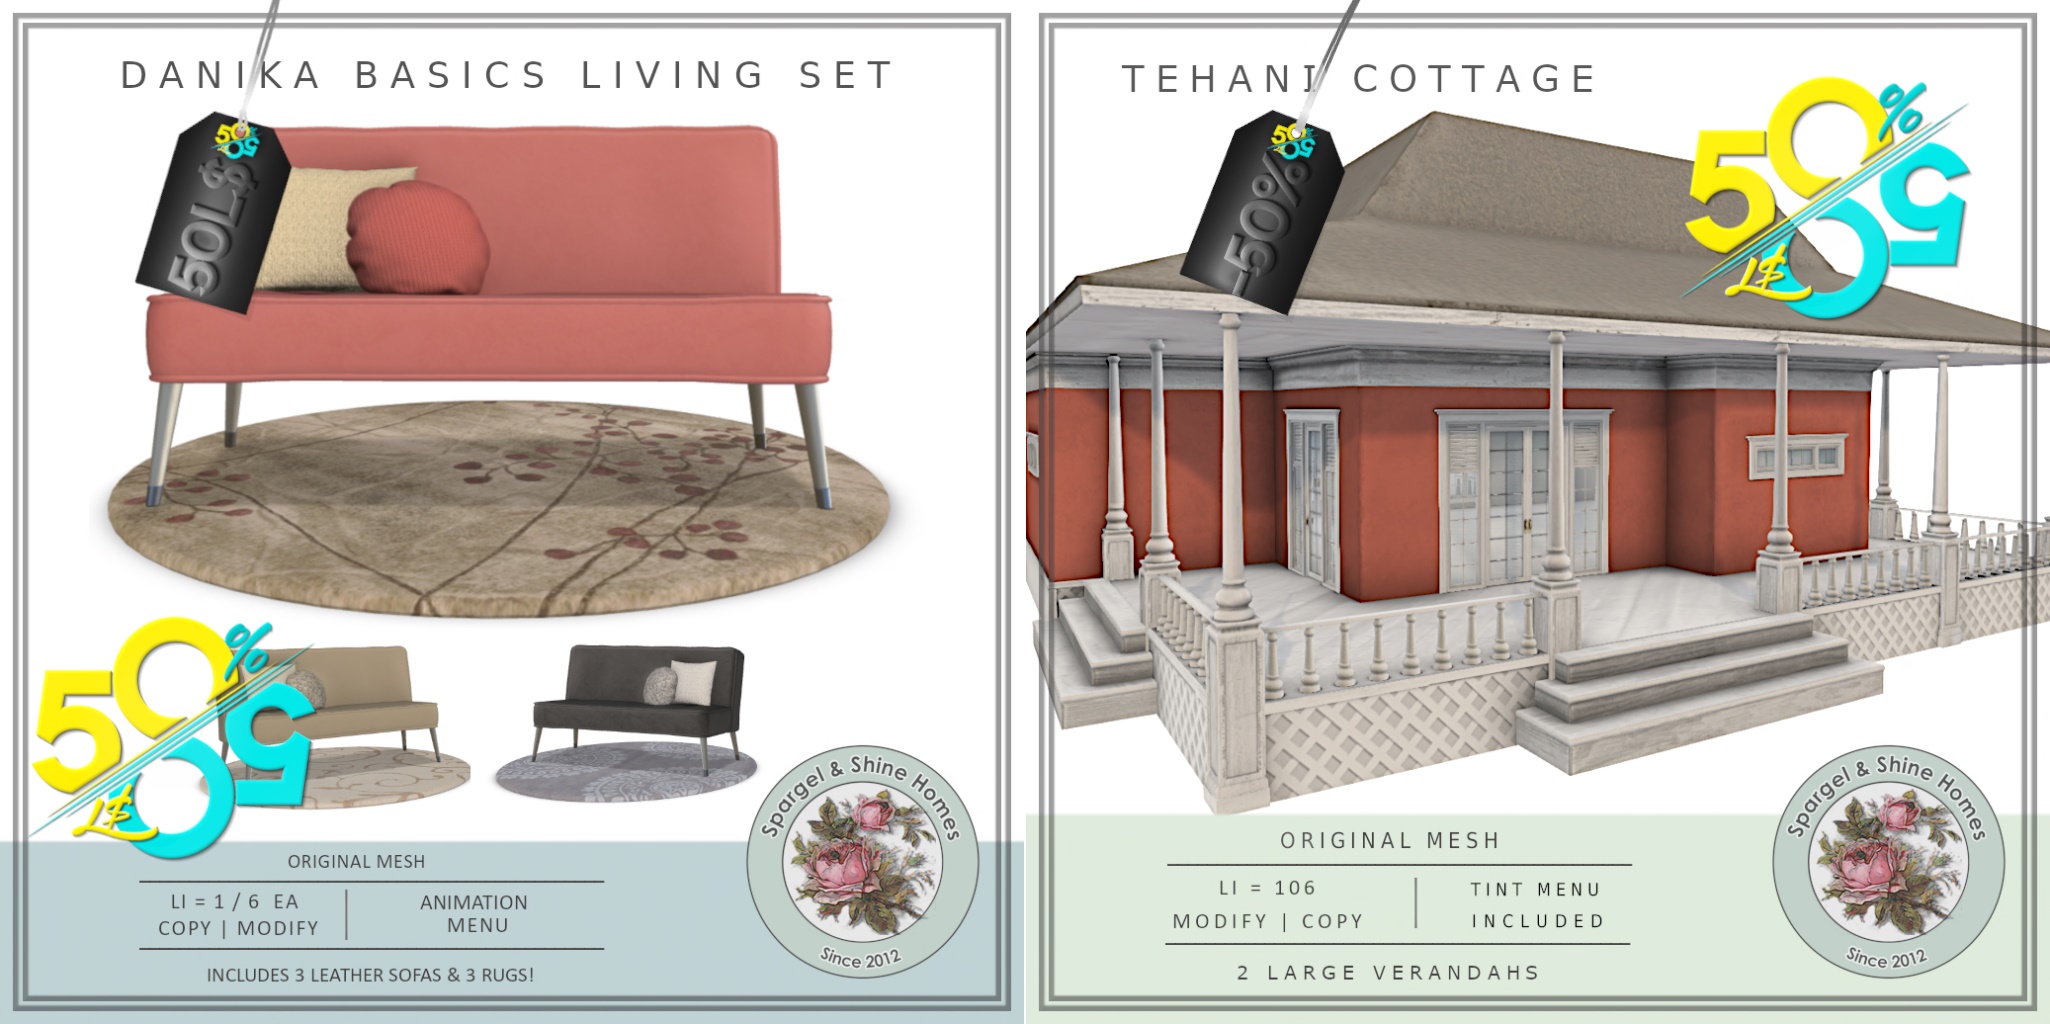 Spargel & Shine – Danika basics Living Set & Tehani Cottage